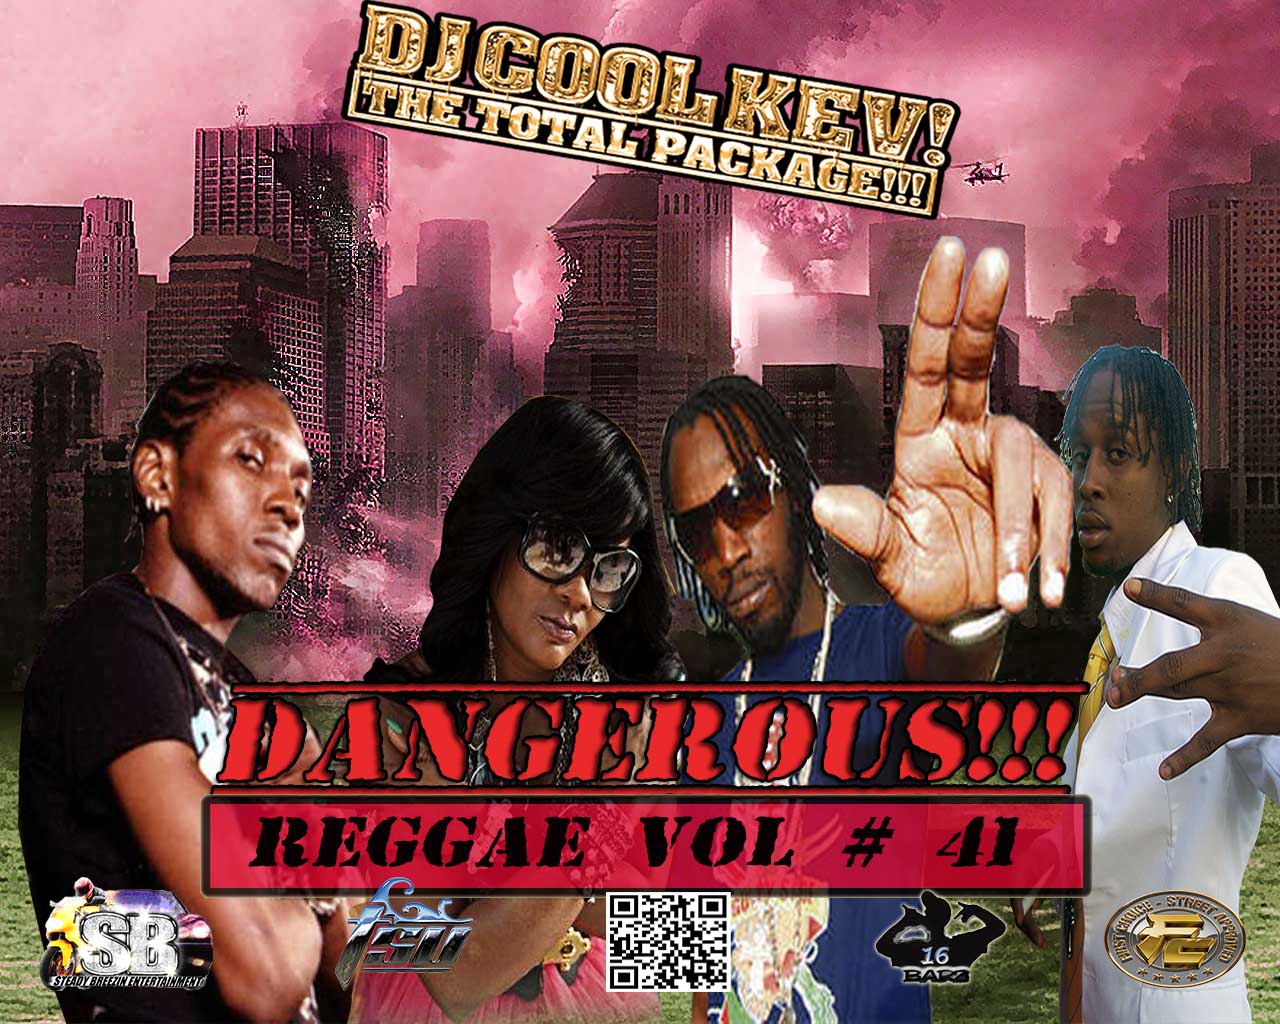 DJ Cool Kev – REGGAE 41, Reggae, Dancehall Reggae, Throwback Reggae, Mixtape Downloads, Downloads